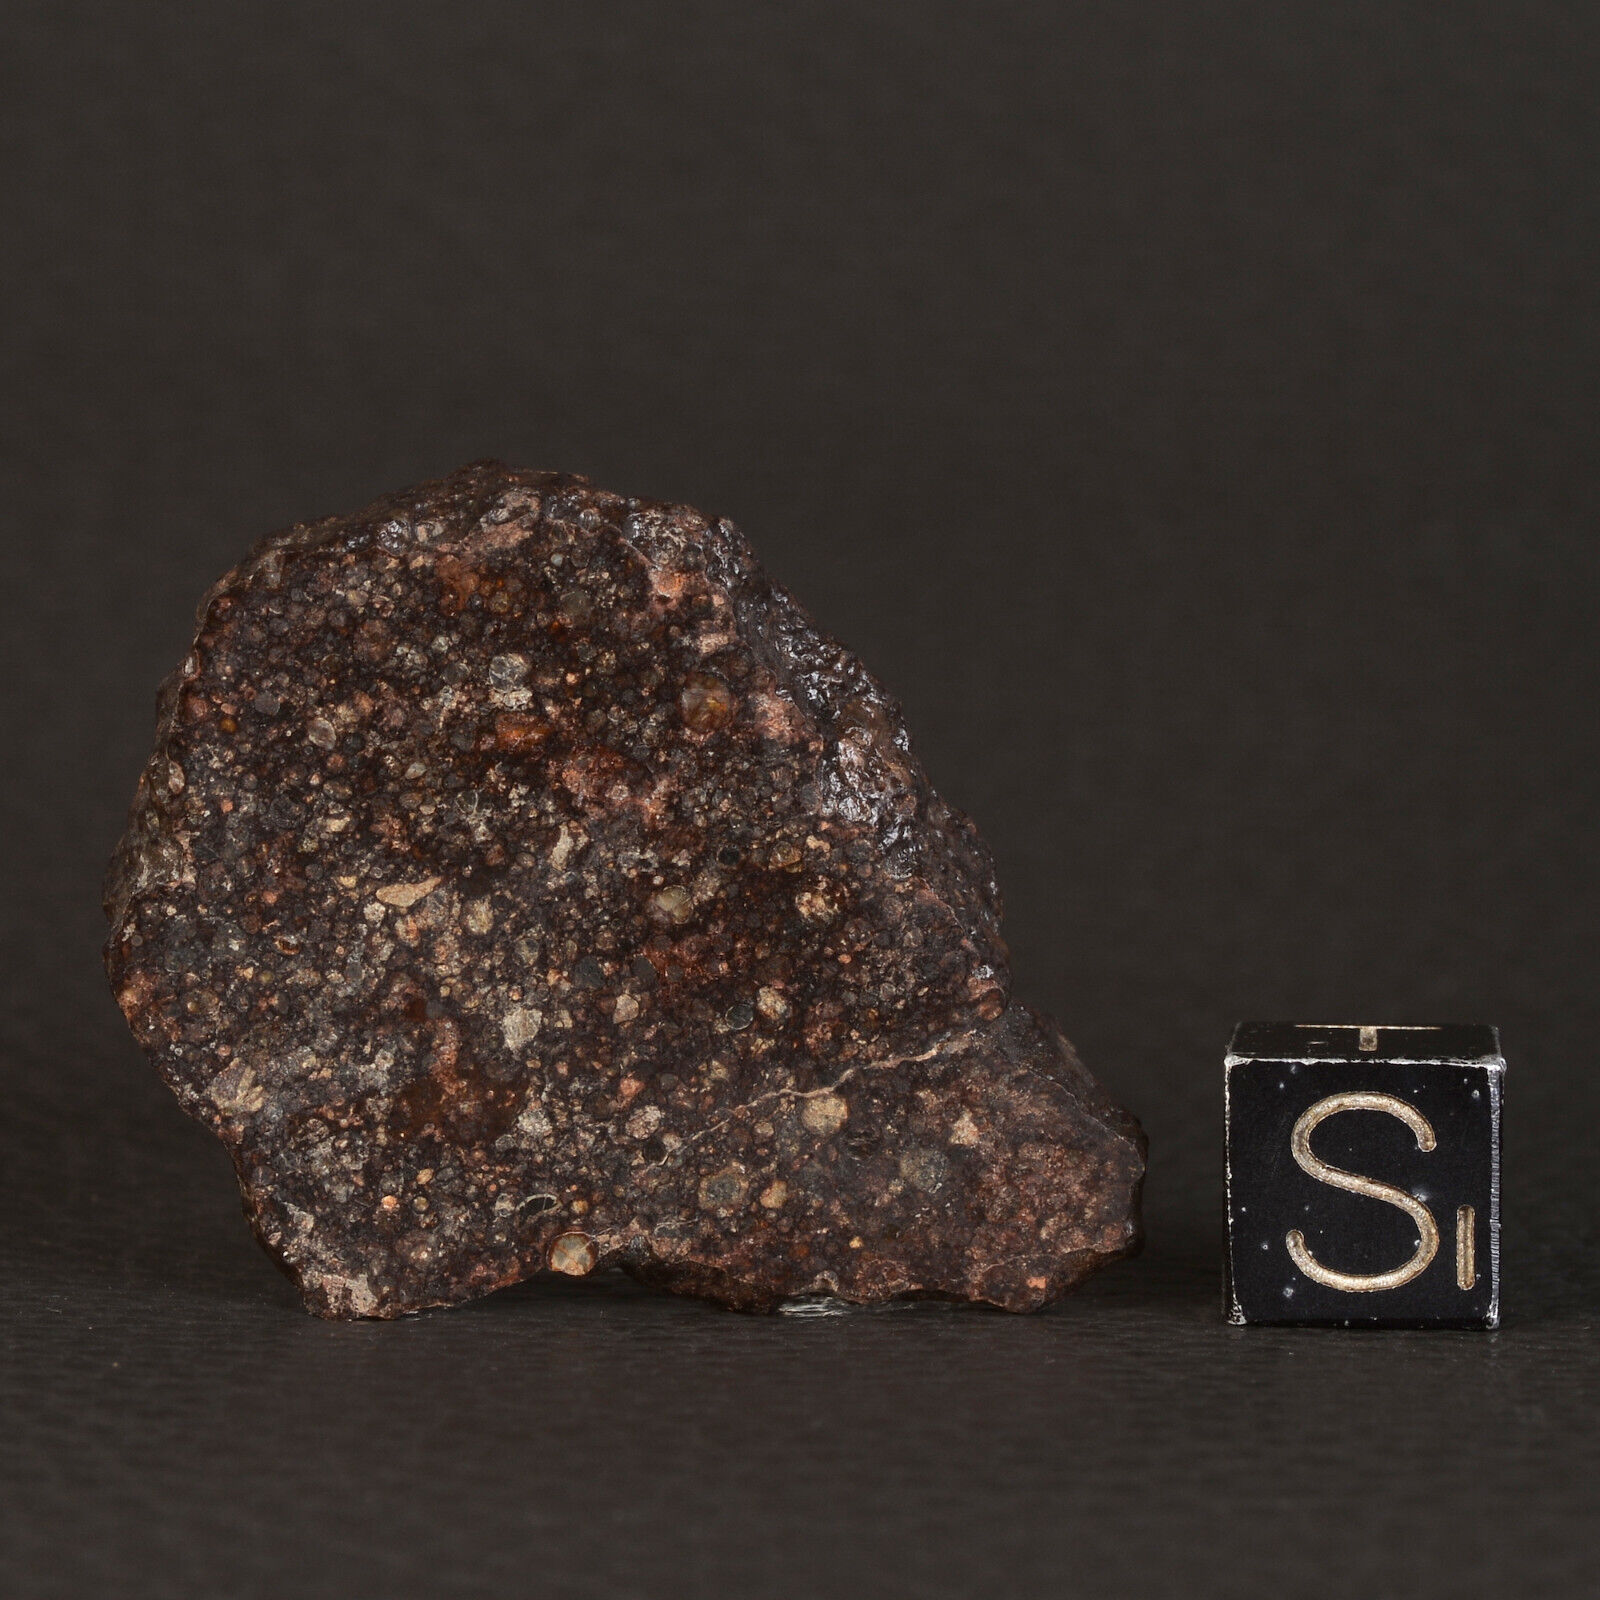 Meteorite Nwa 15729 Of 19,19 G End Cut Chondrite Type LL3 D47.1-3